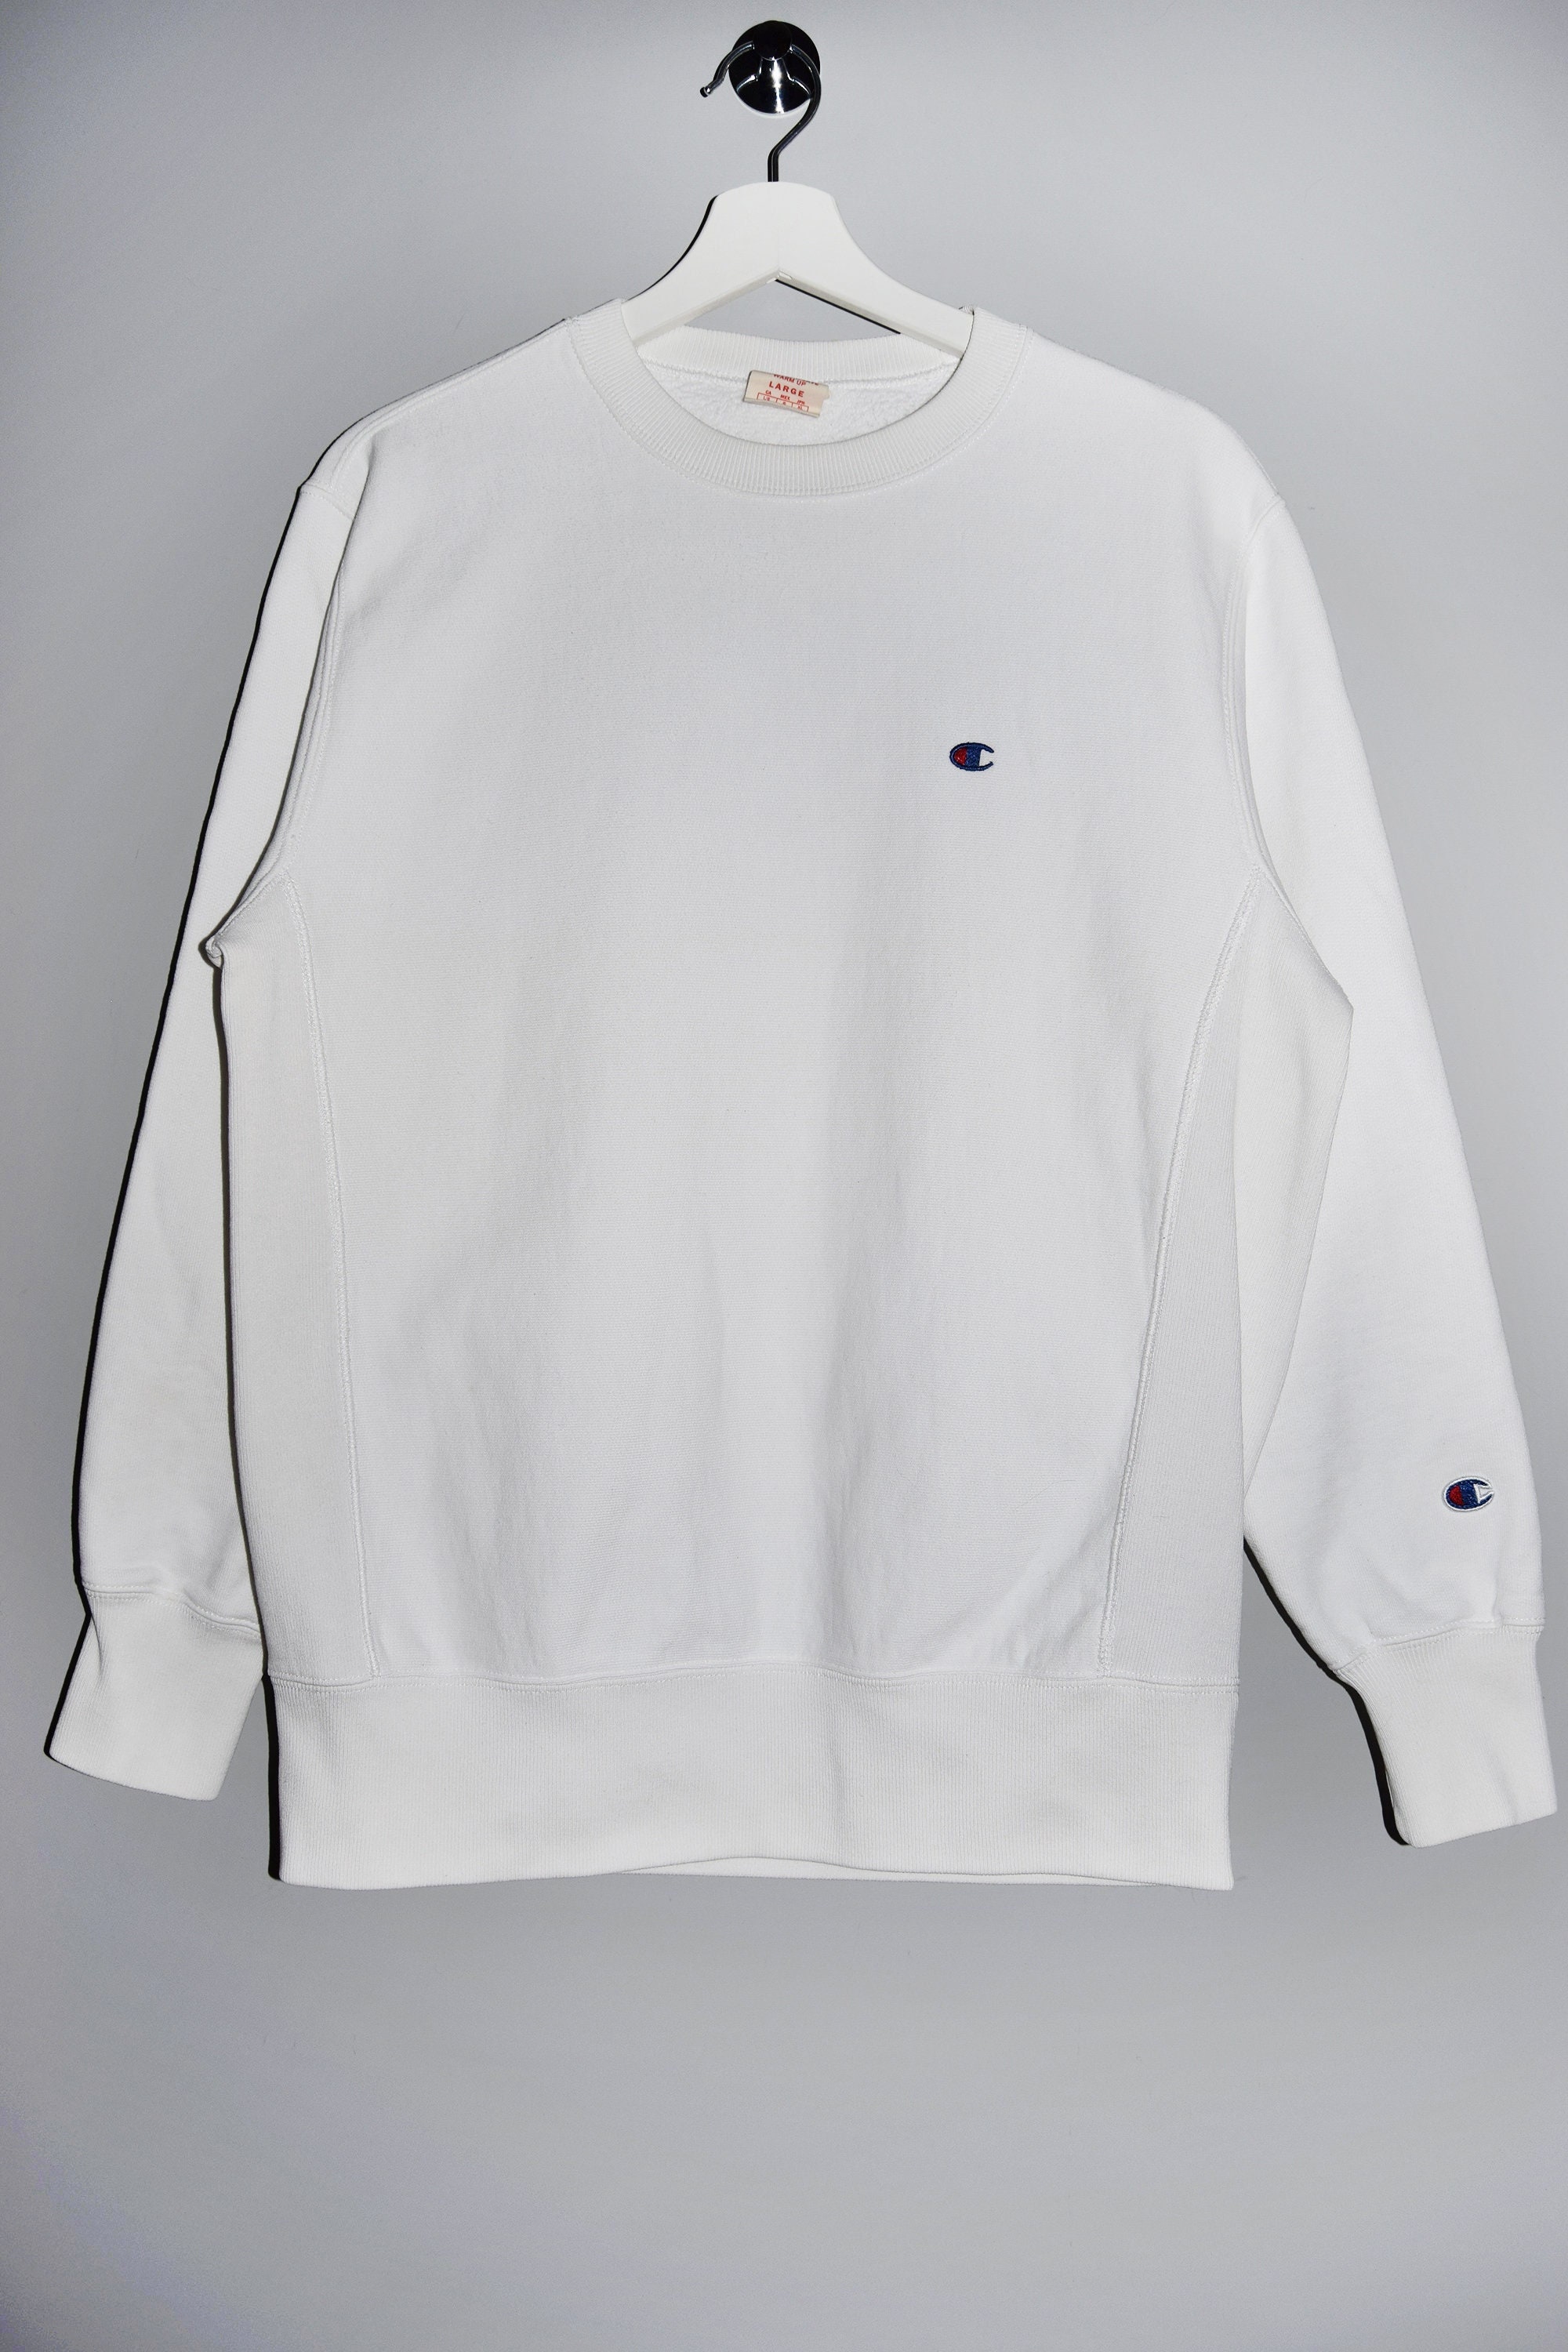 Vintage Champion Reverse Weave Crewneck Sweatshirt in White